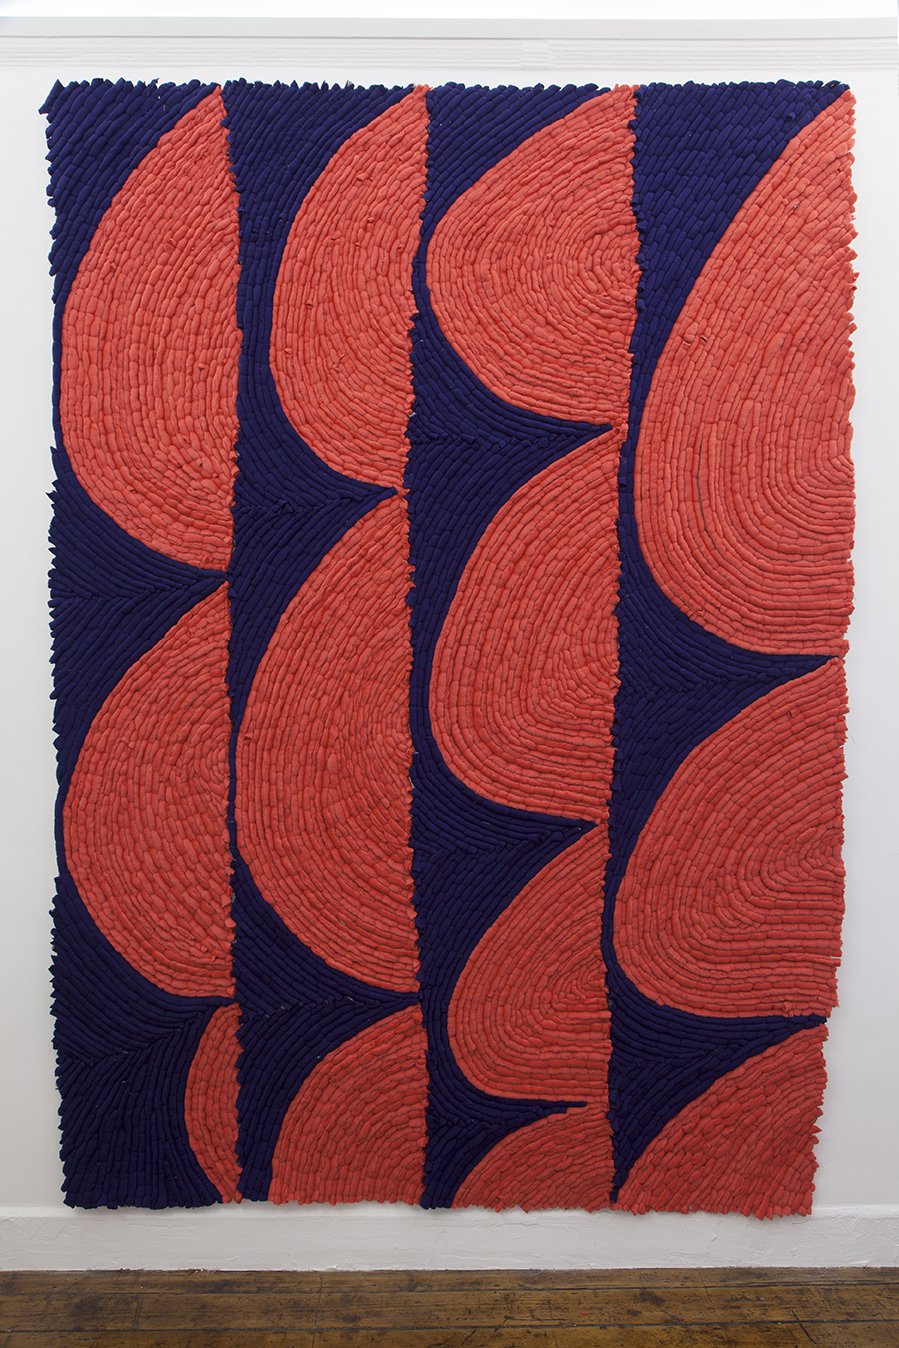 Enrico David, Untitled, wool on canvas, 283 x 202 cm (111 3/8 x 79 1/2 in), 2014 – 2015